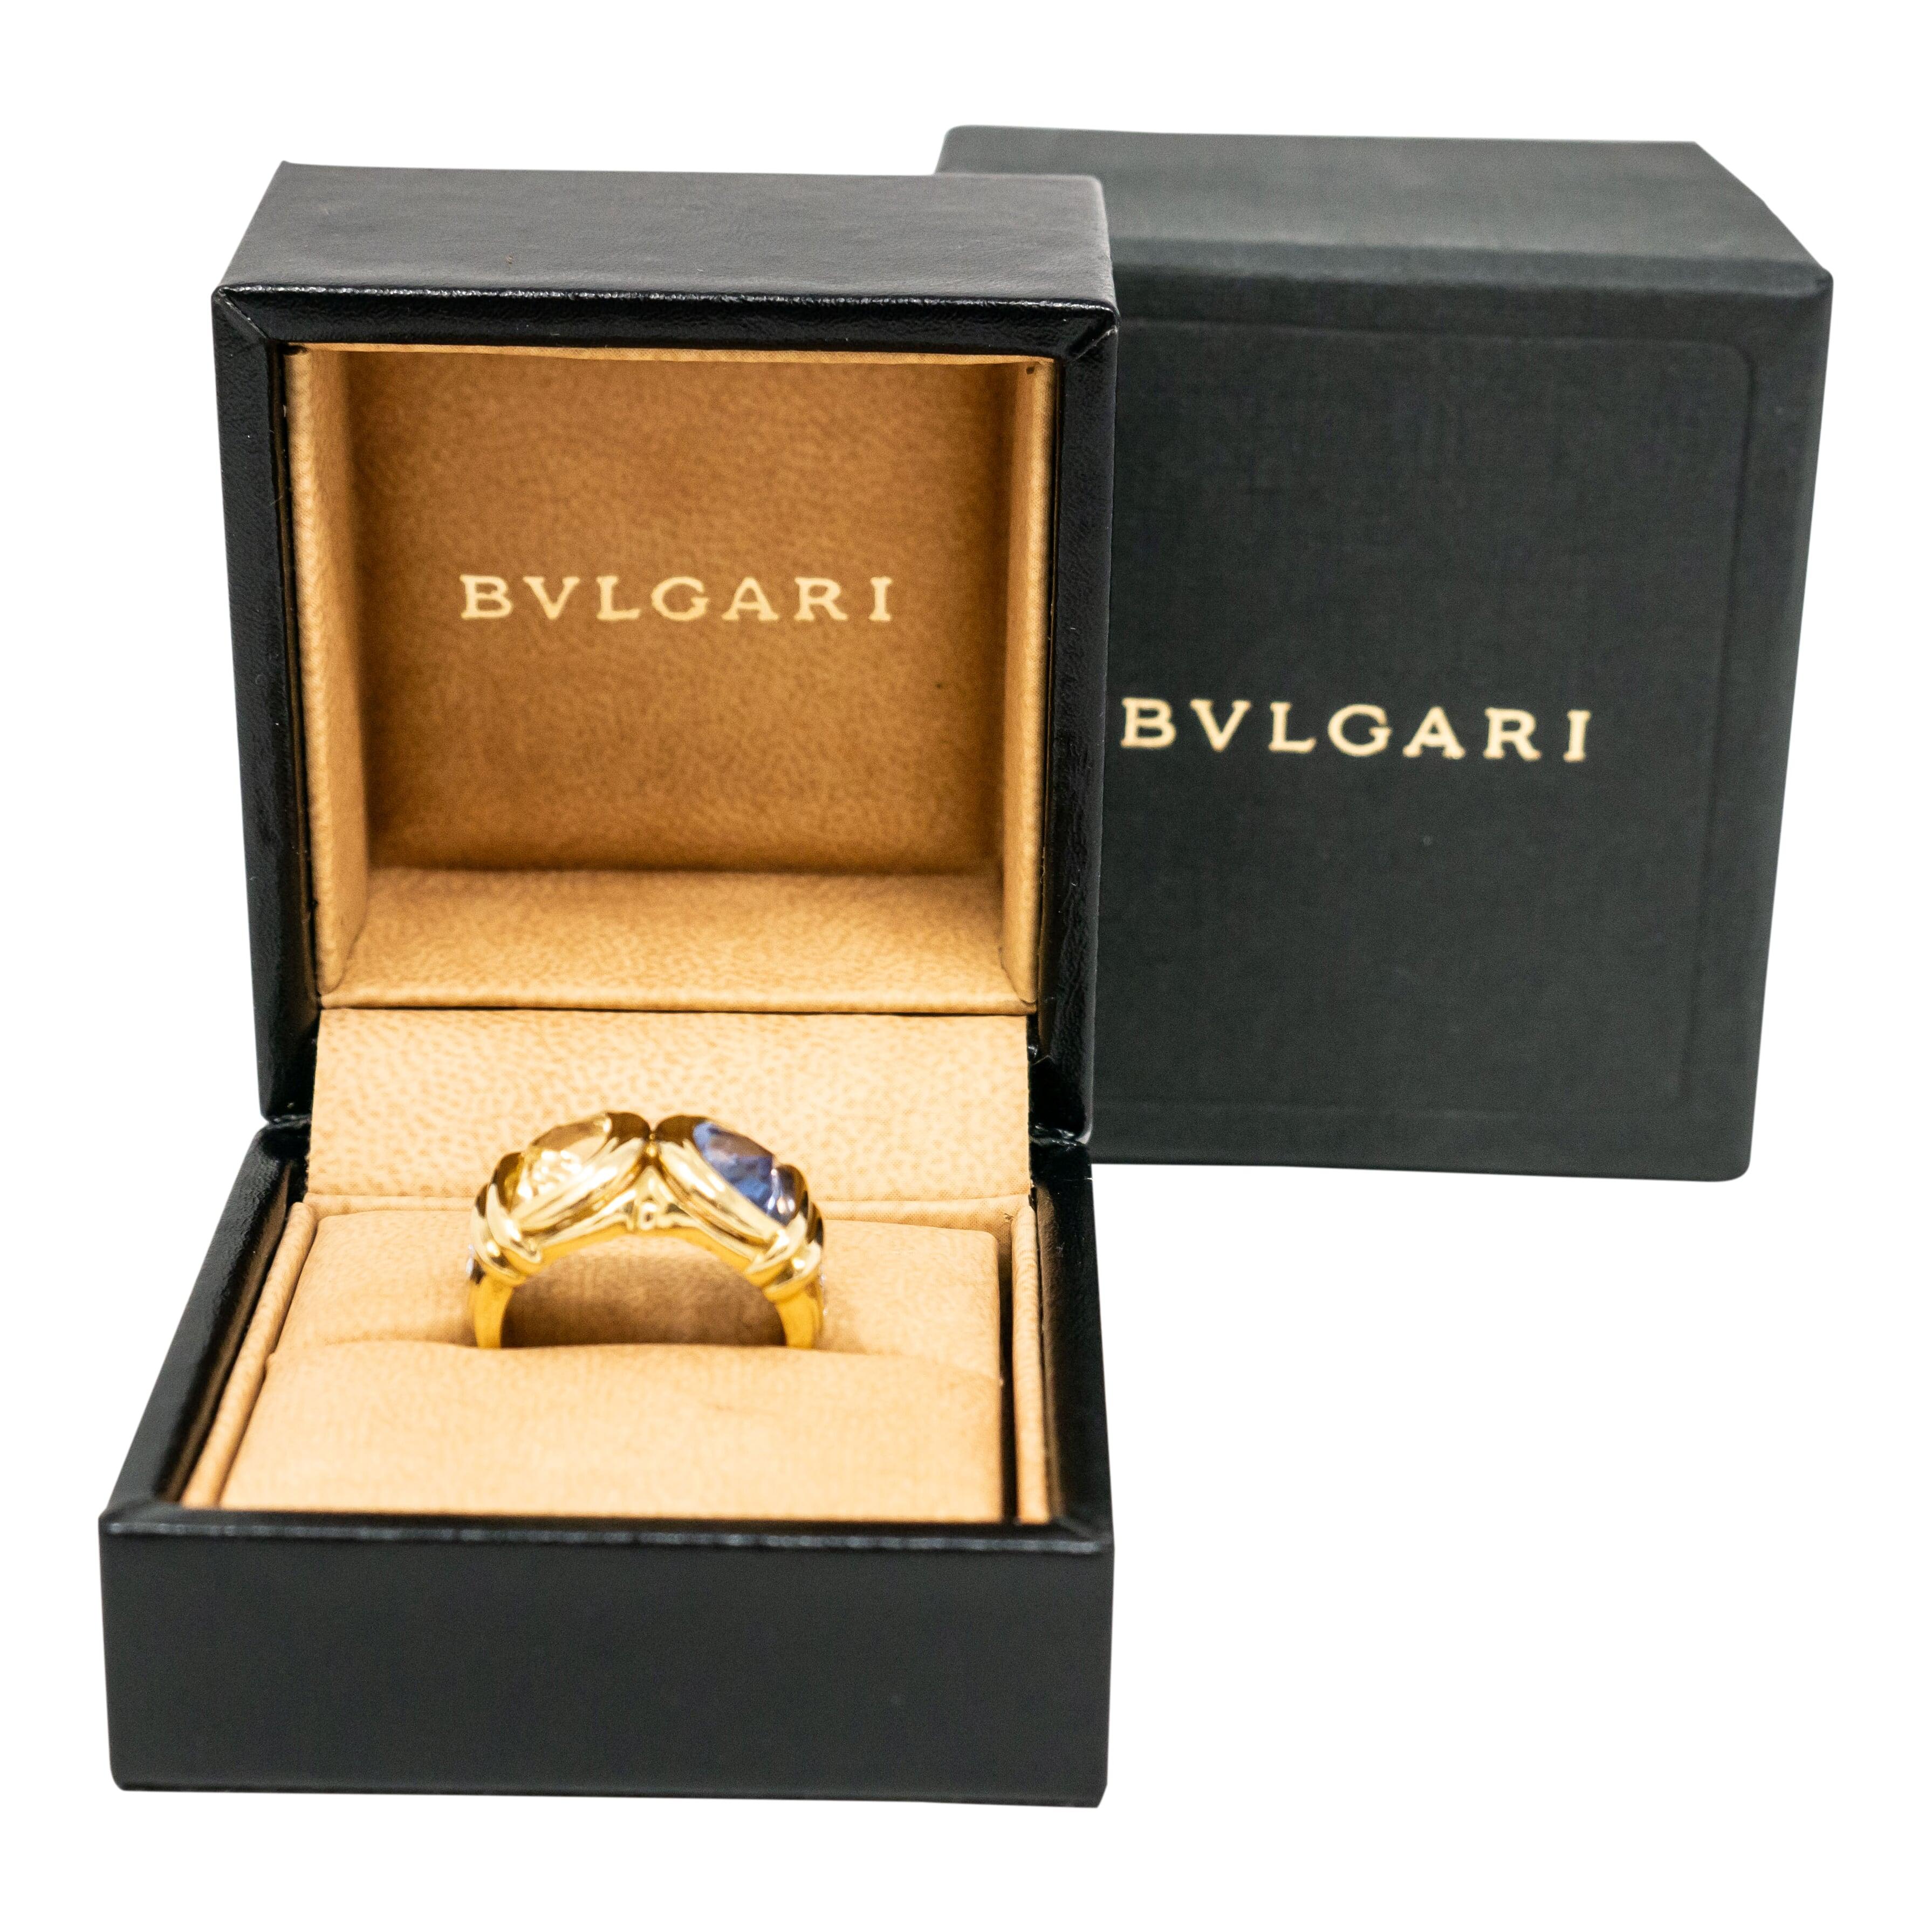 BVLGARI White Gold 1 Diamond Ring Size 7; 7 total grams in 18k gold; 0.07total grams in diamonds
